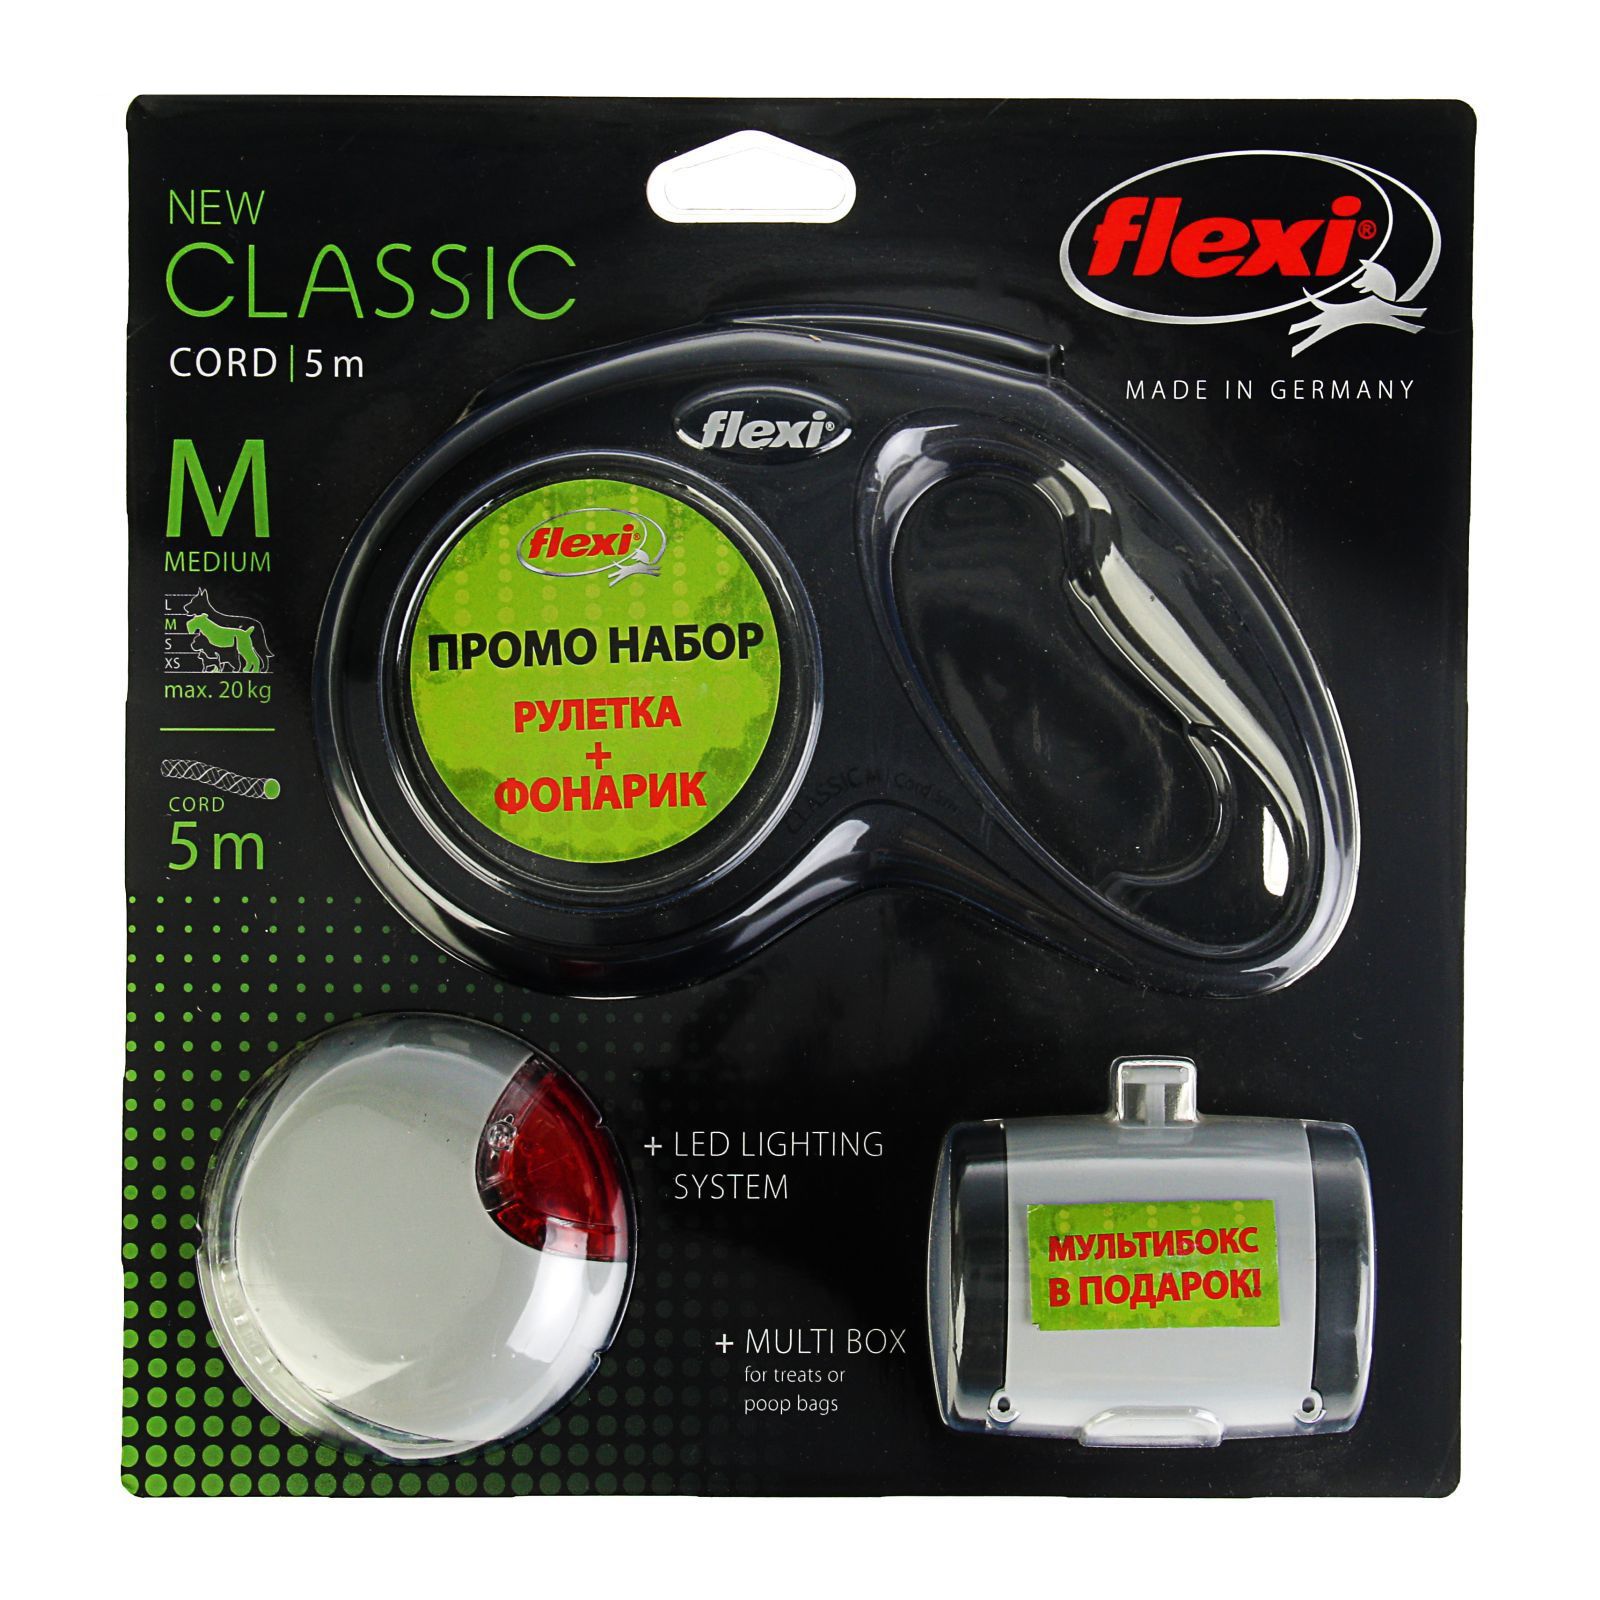 Поводок-Рулетка Flexi New Classic М Чёрный для собак (до 20 кг) трос 5 м + LED фонарик + Multi-box 2